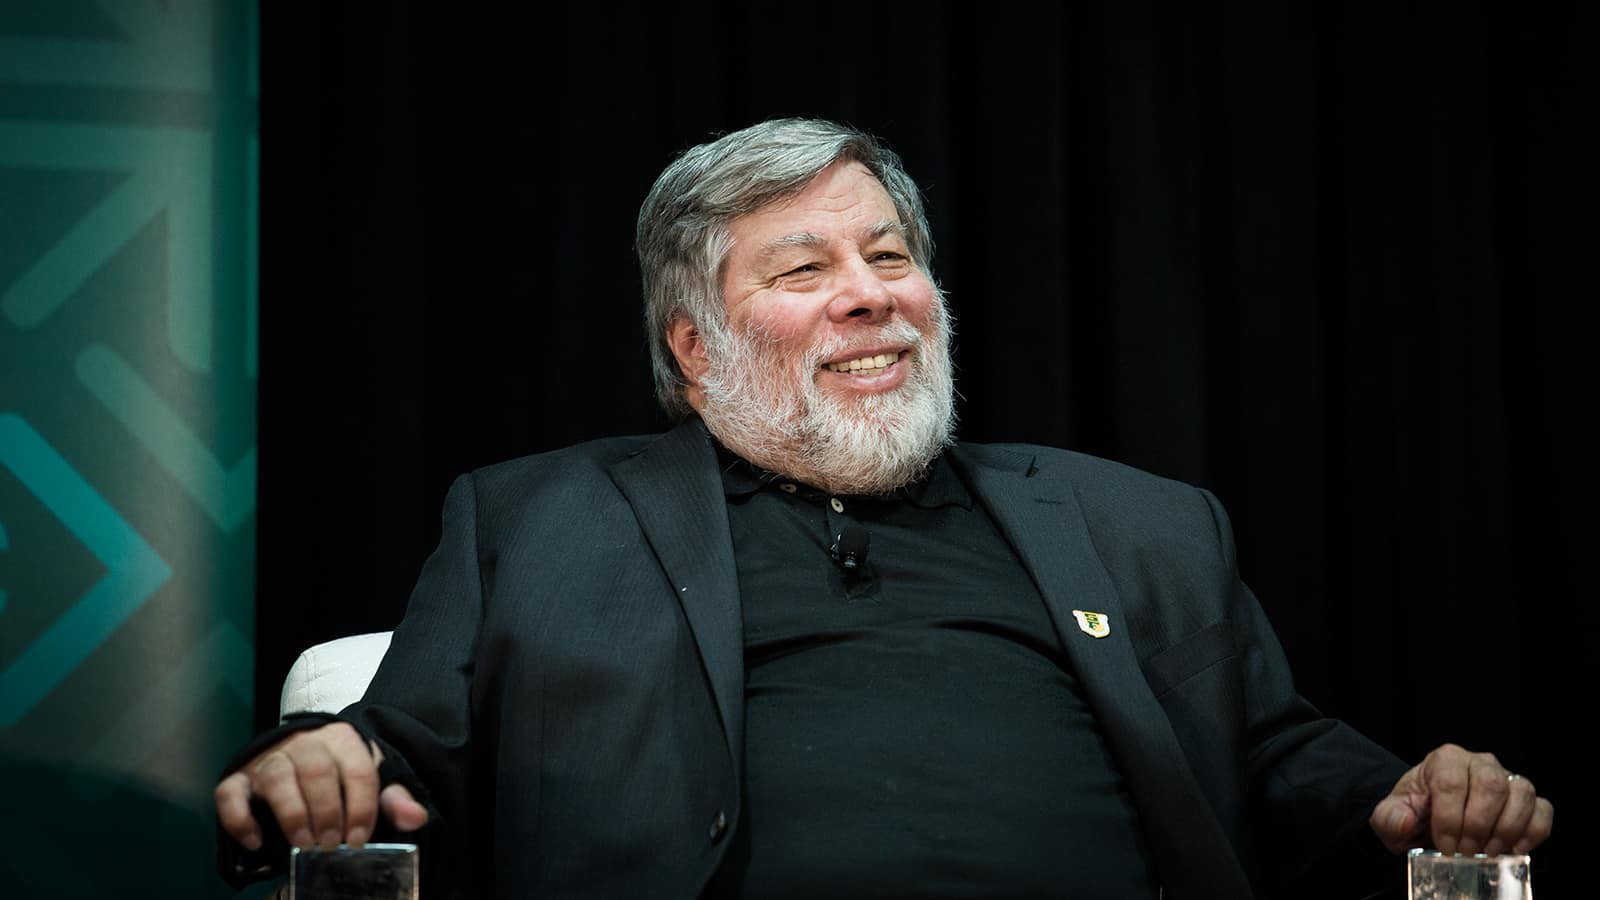 Why Steve Wozniak is not a billionaire?